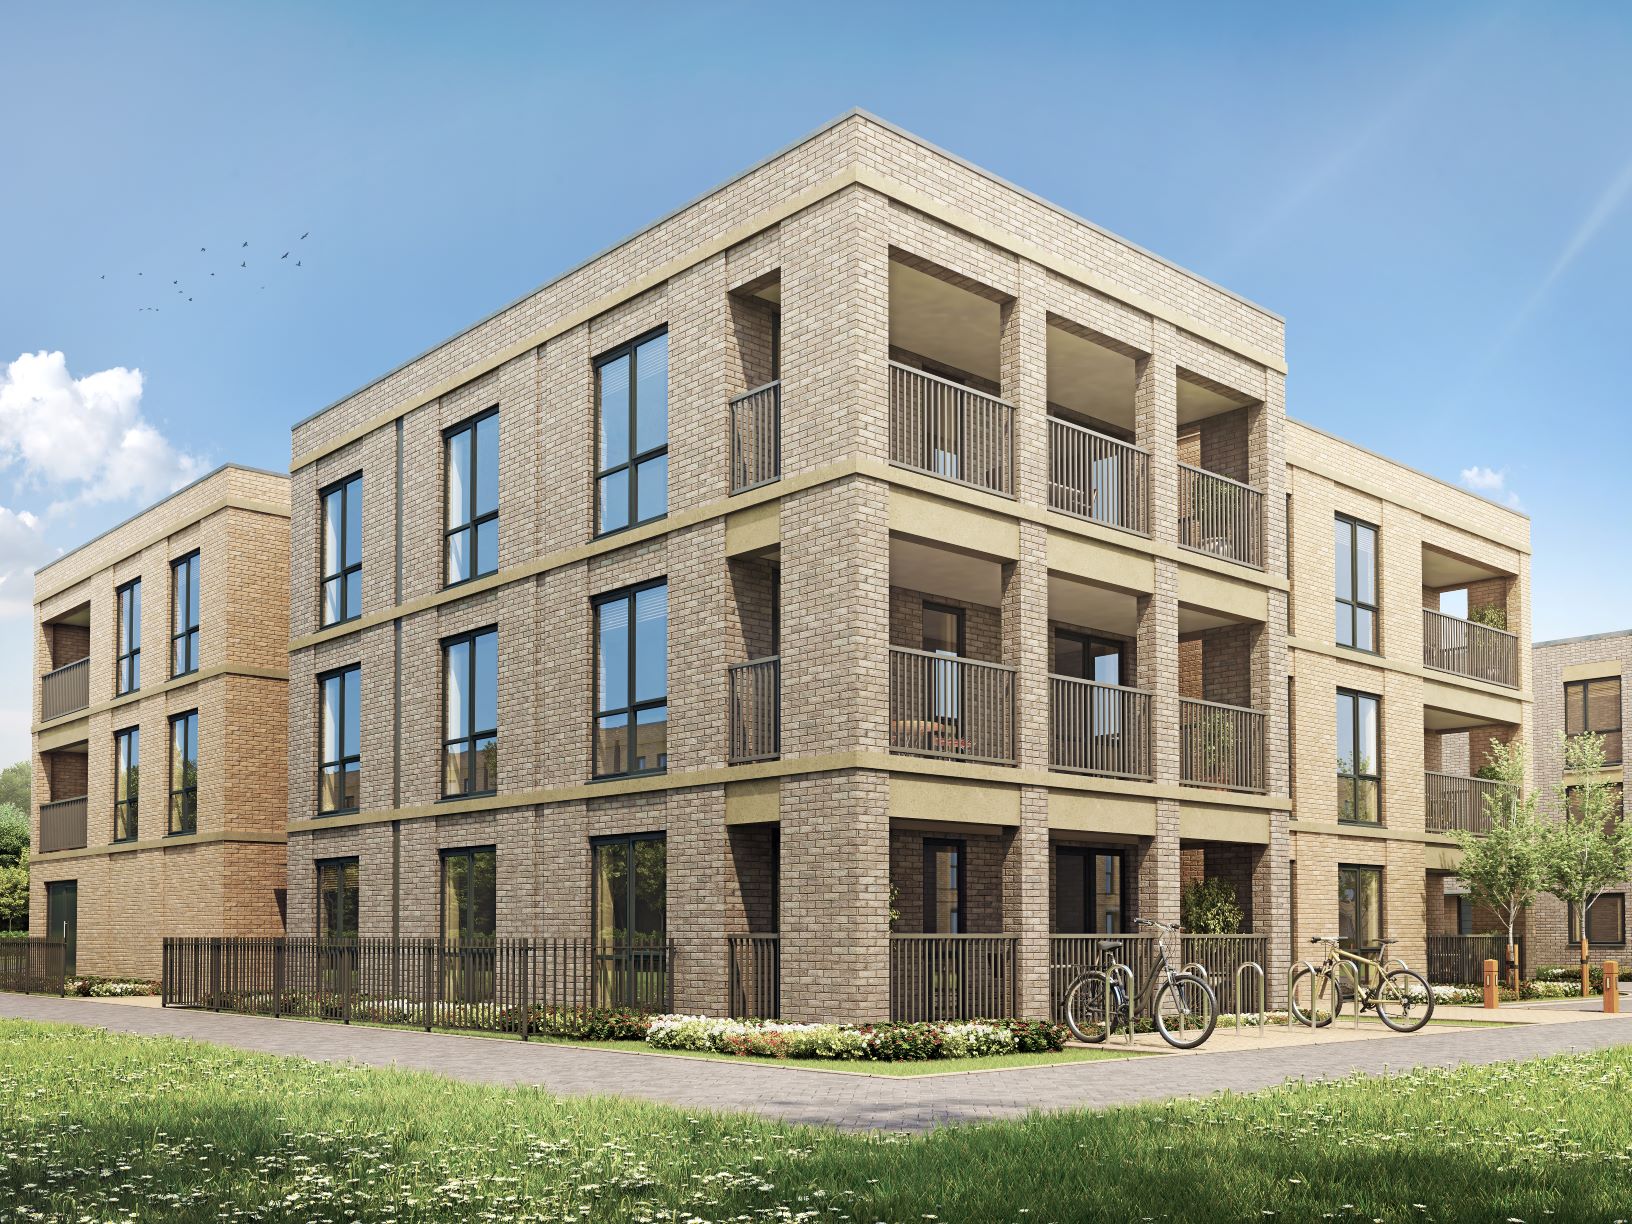 Cambridge Residential Rental Market, Spring 2021